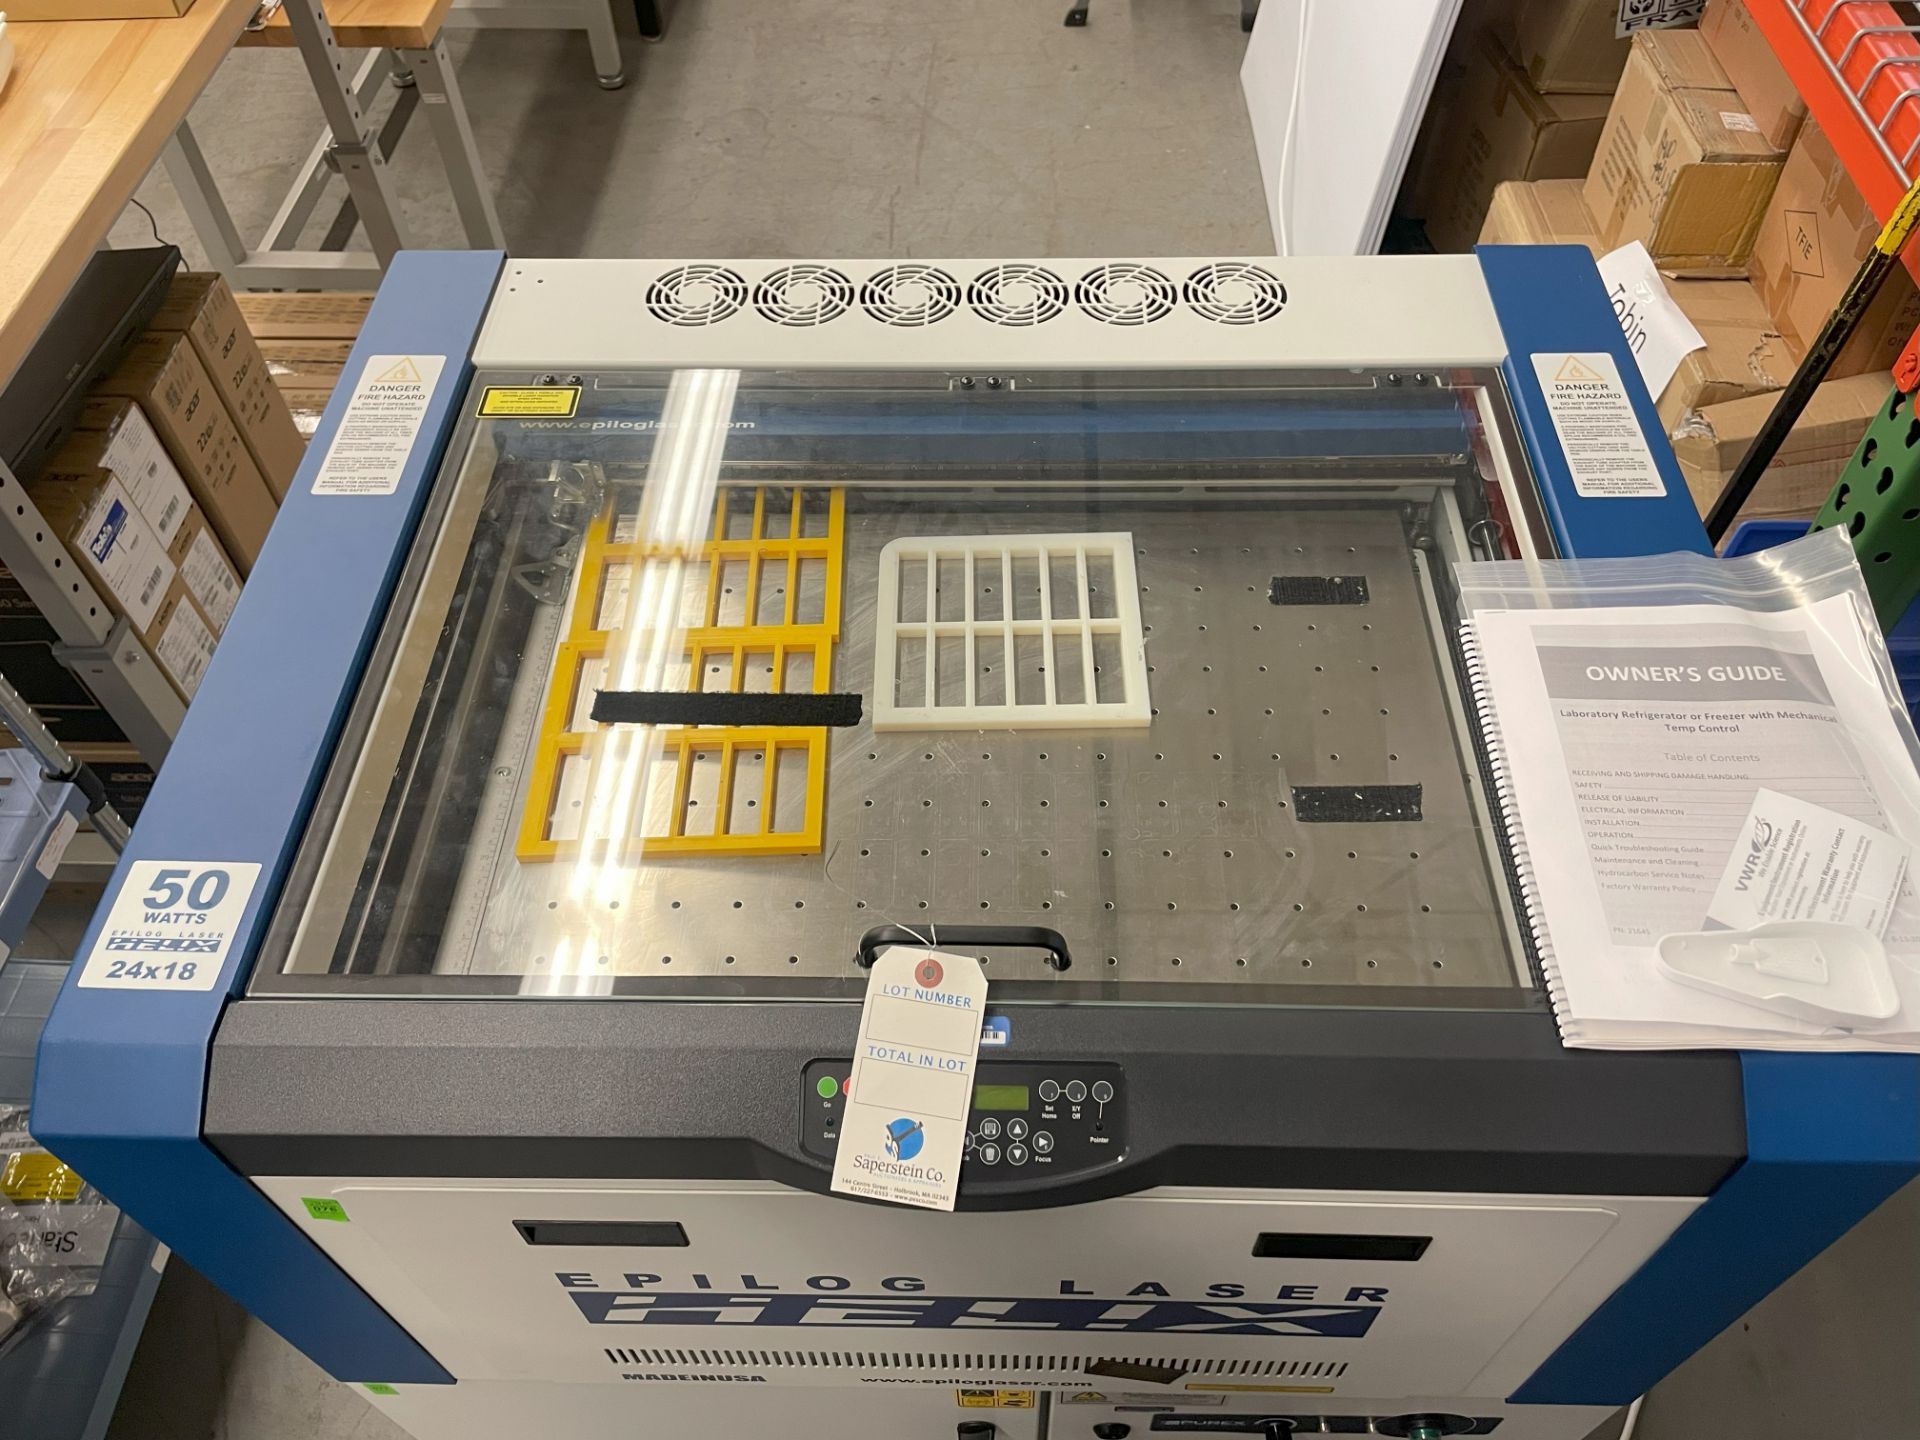 2018 Epilog Helix Laser Engraving Machine #8000, Class 2, 50 Watt, 24" x 18" w/ Manual, Purex Fume - Image 2 of 5